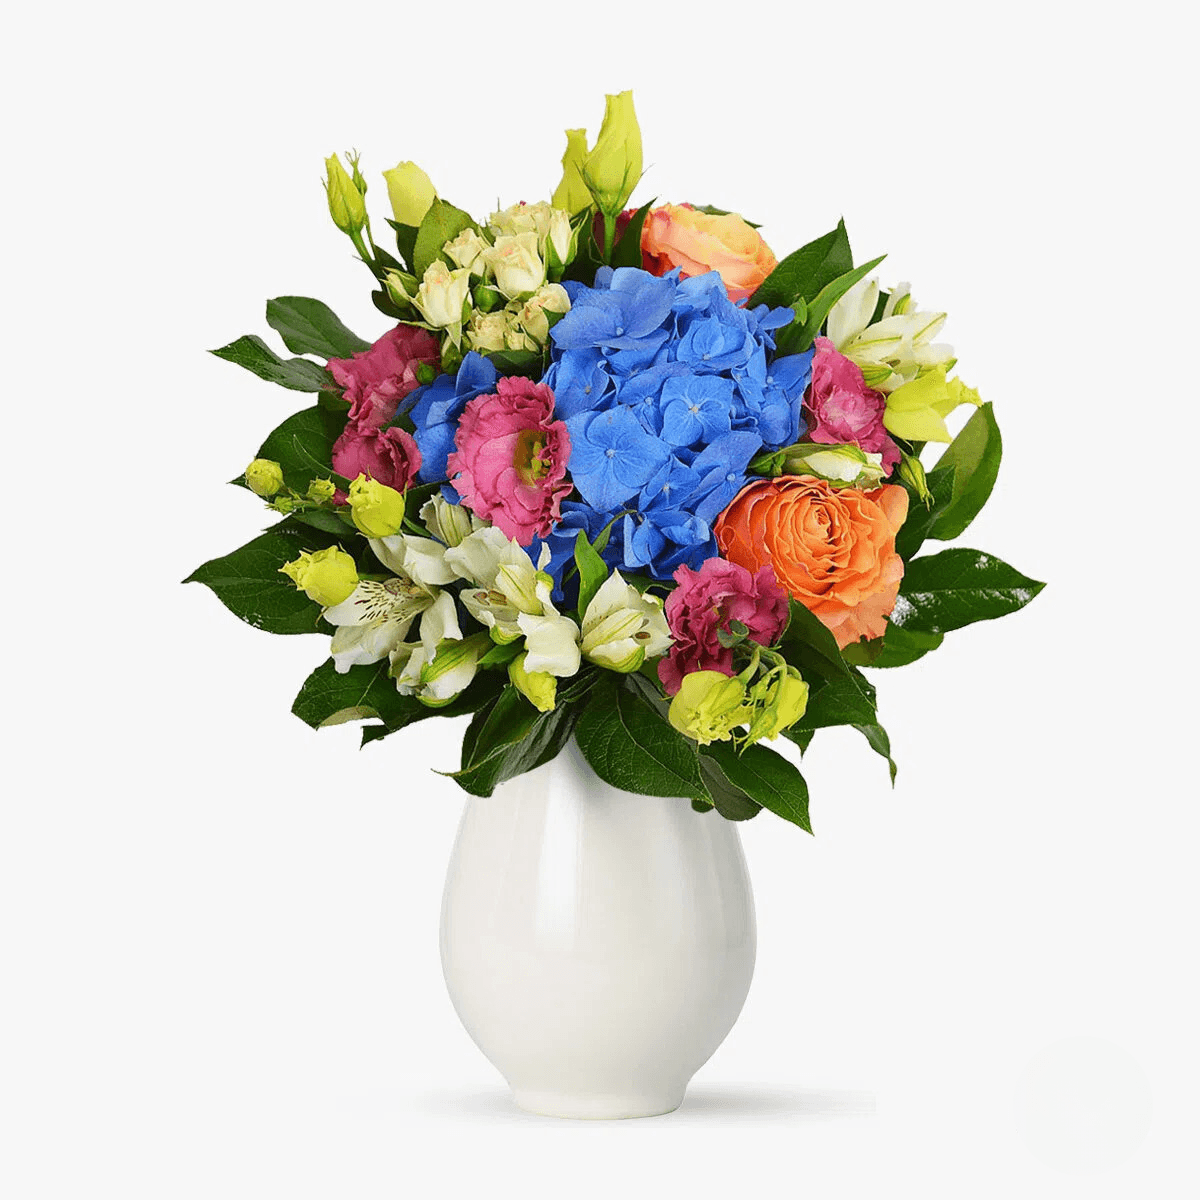 Buchet de flori cu hortensie, minirosa, alstroemeria, lisianthus Nuante de albastru